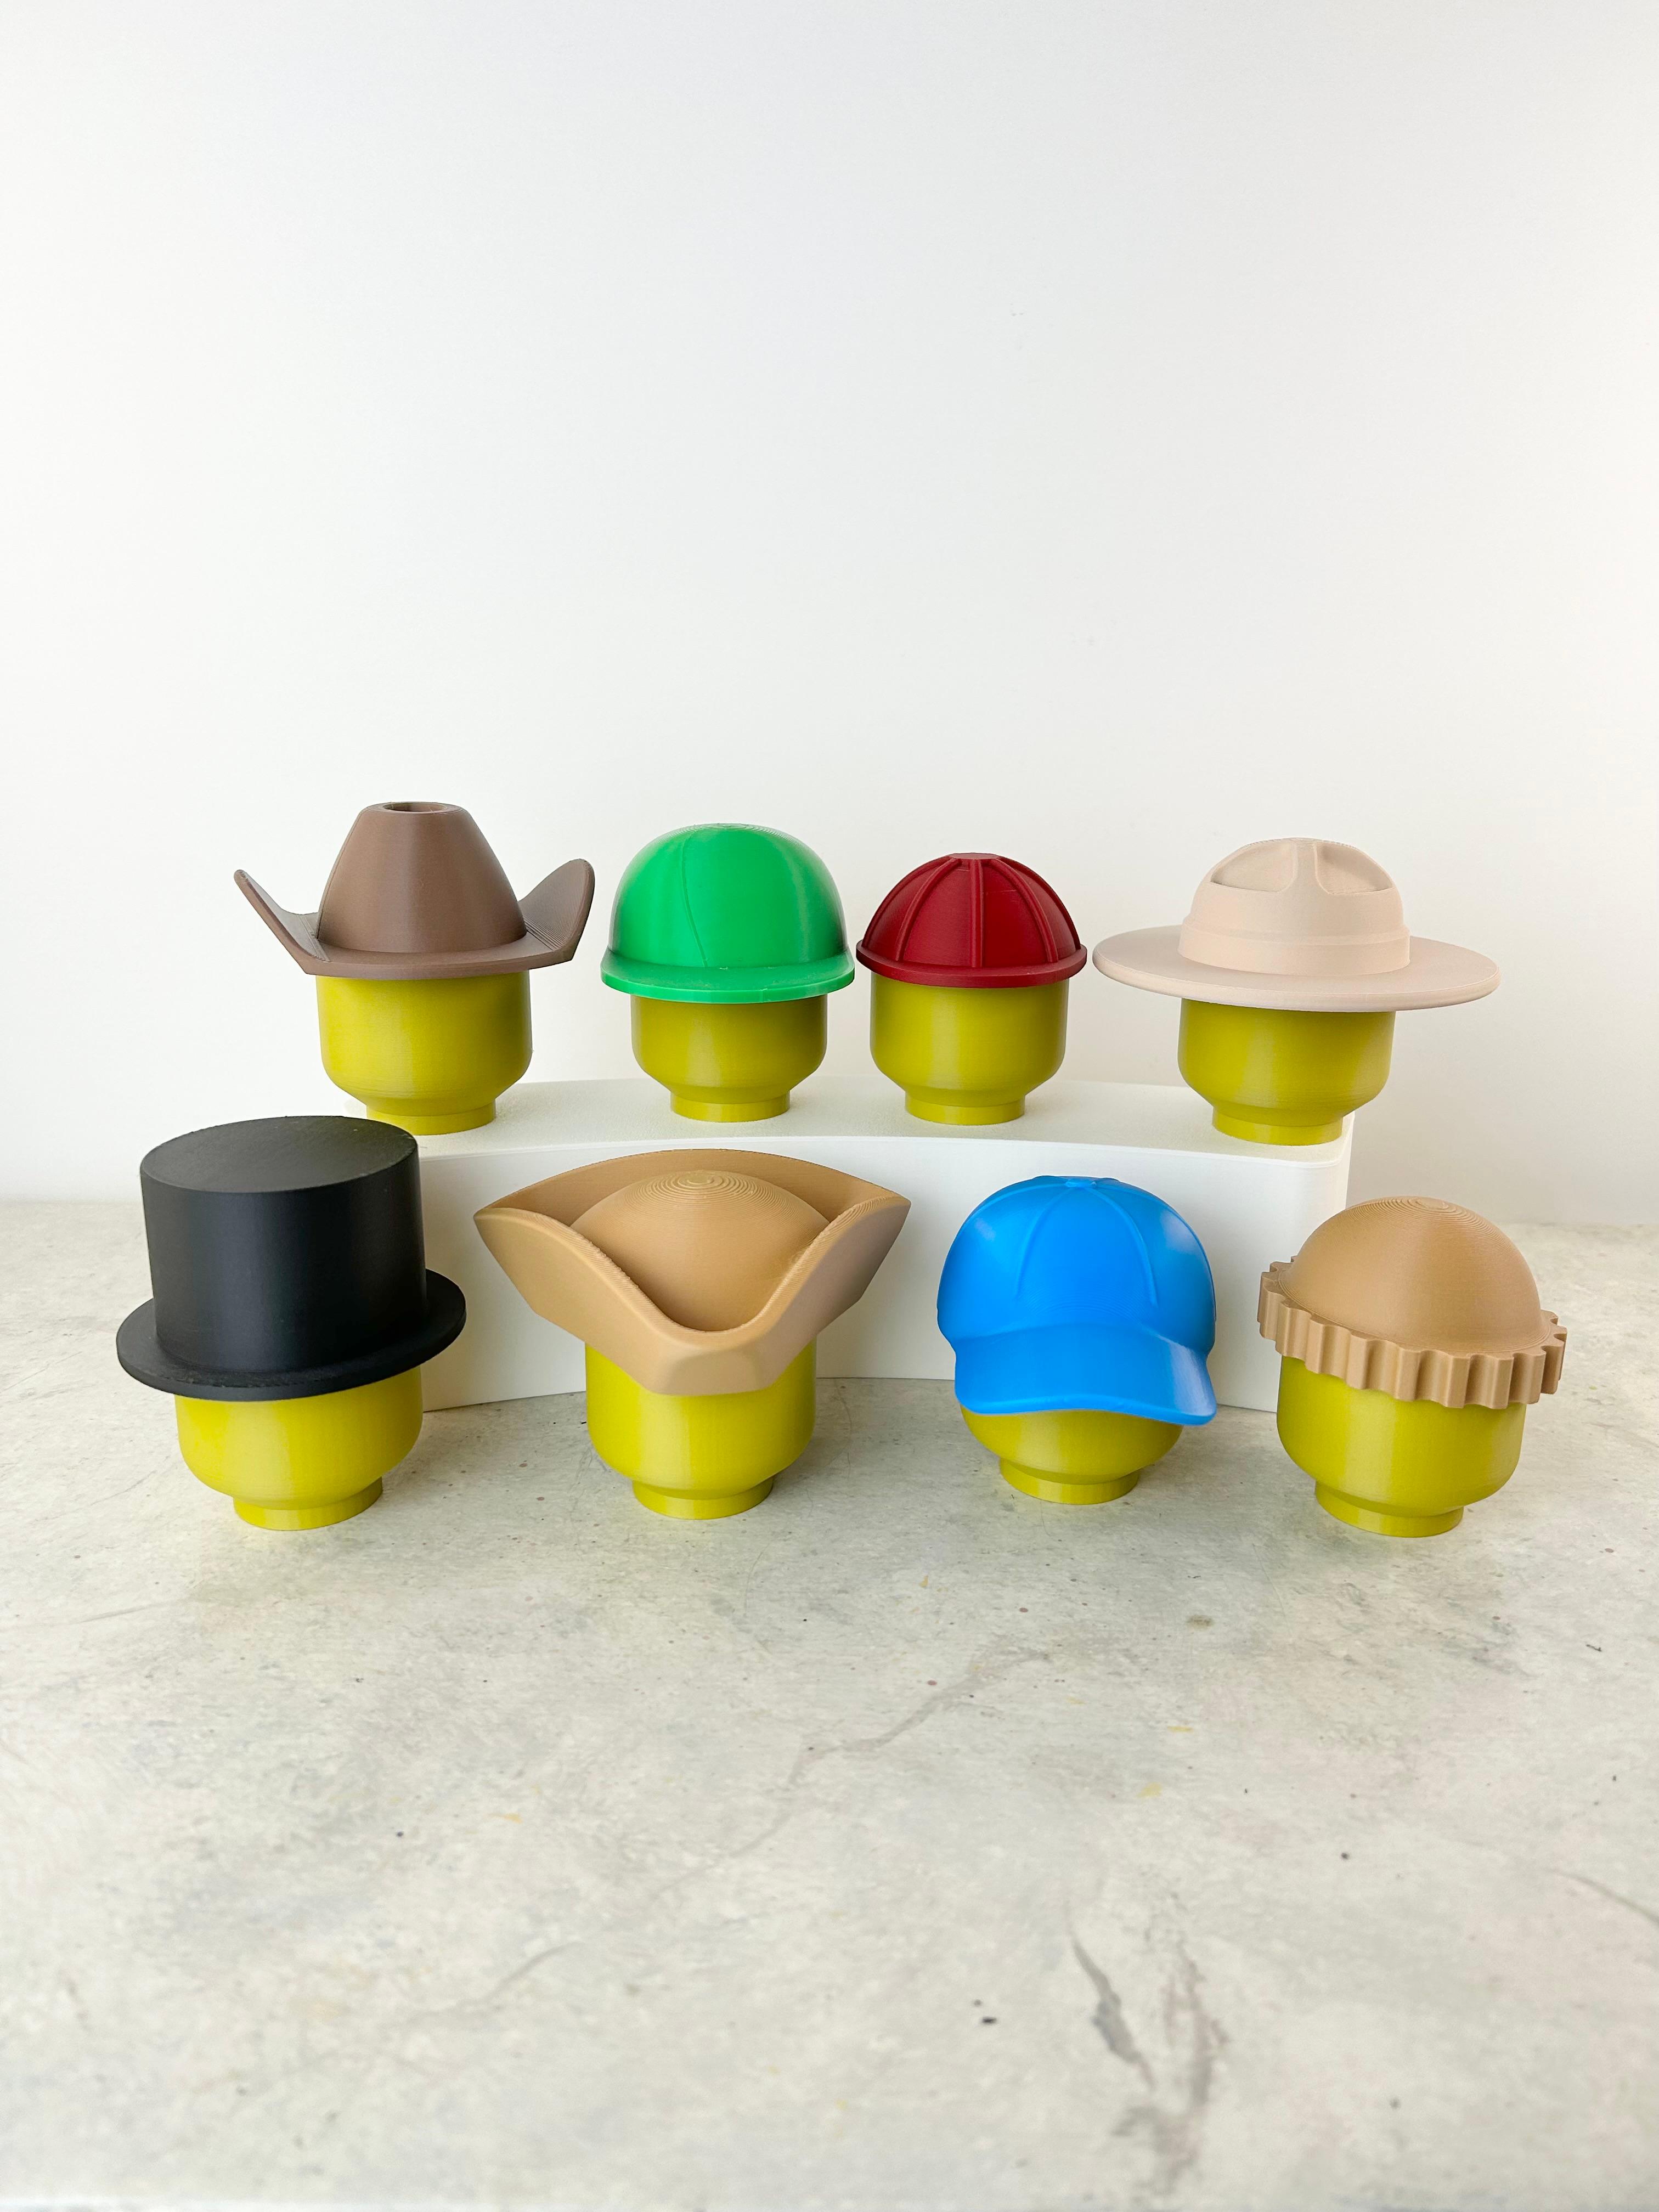 Hat Collection (9 inch brick figure hats) 3d model